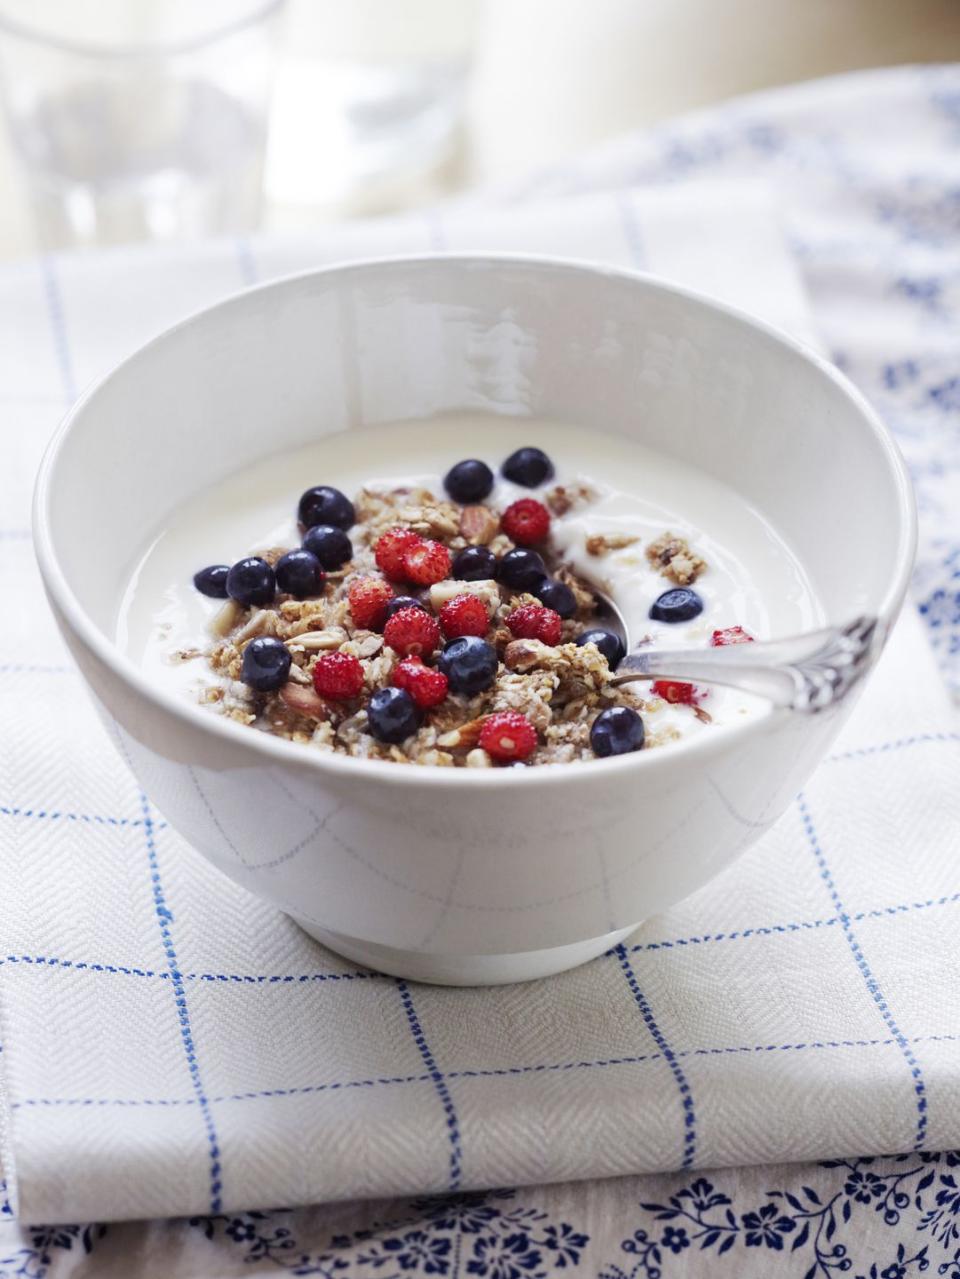 5) Yogurt With Granola